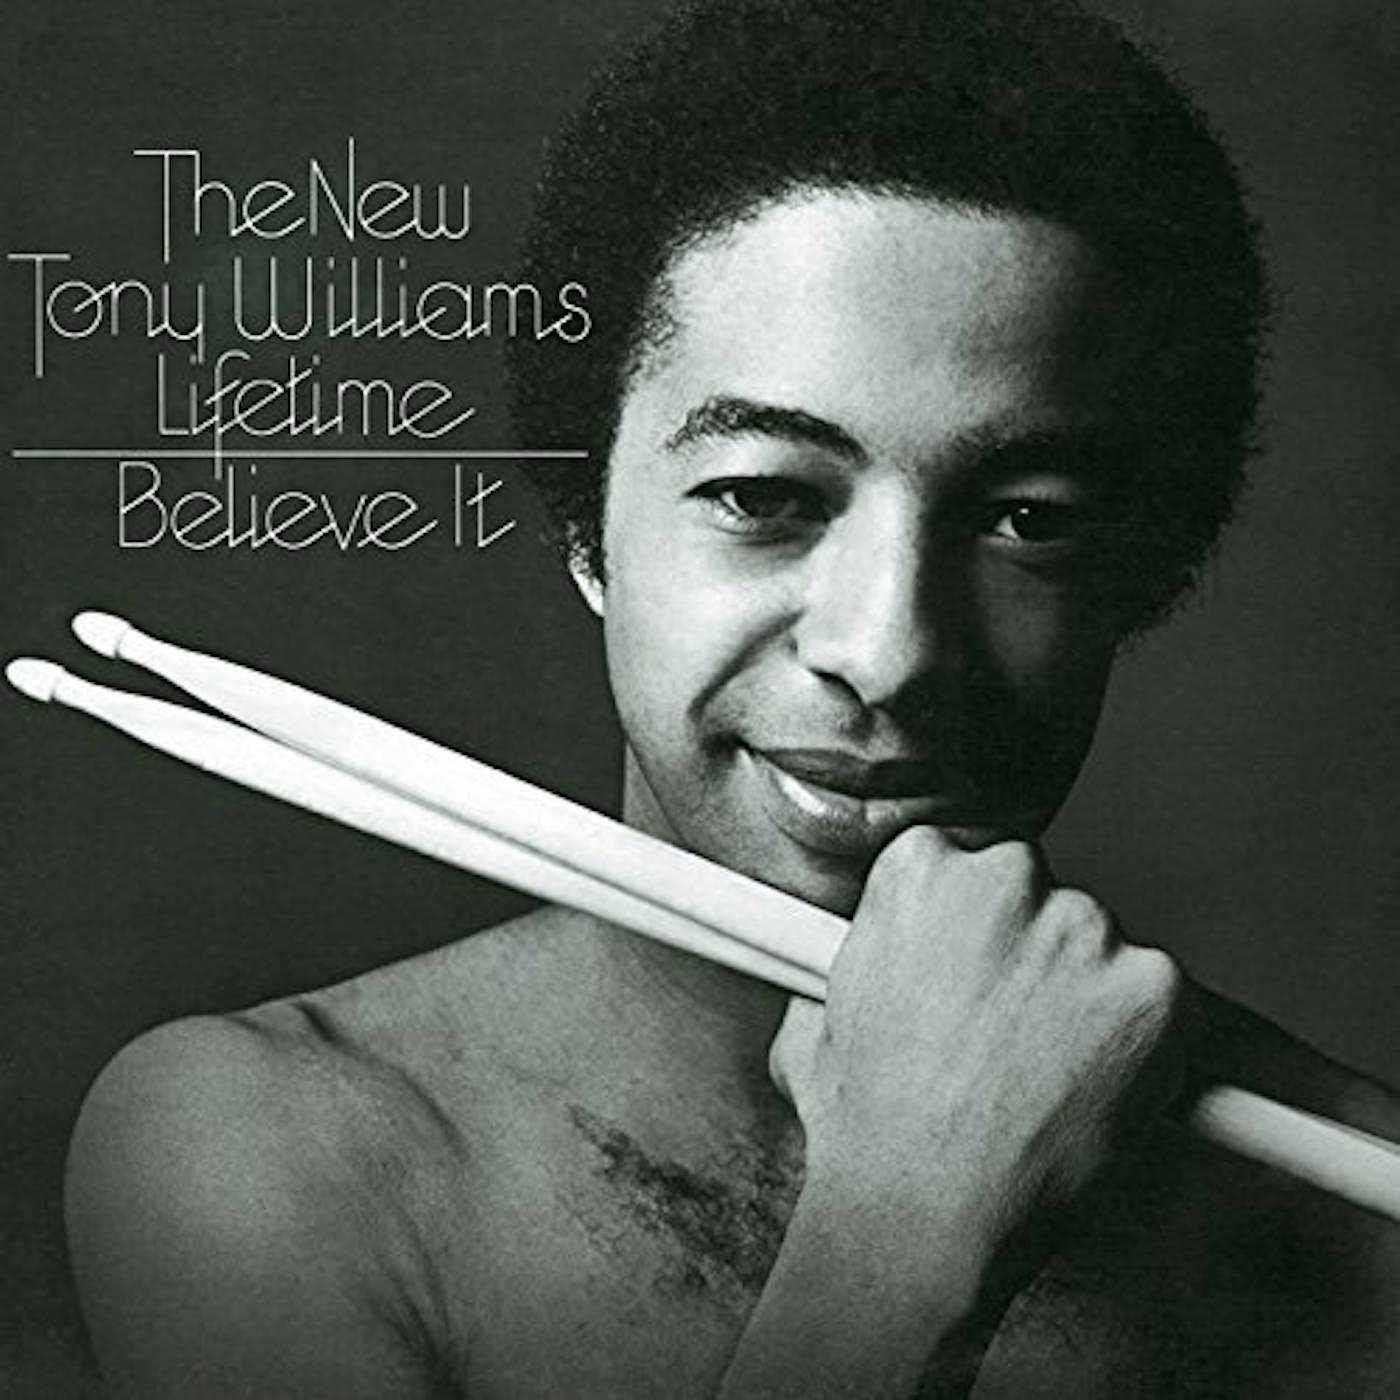 Tony Williams BELIEVE IT / MILLION DOLLAR LEGS / JOY OF FLYING CD